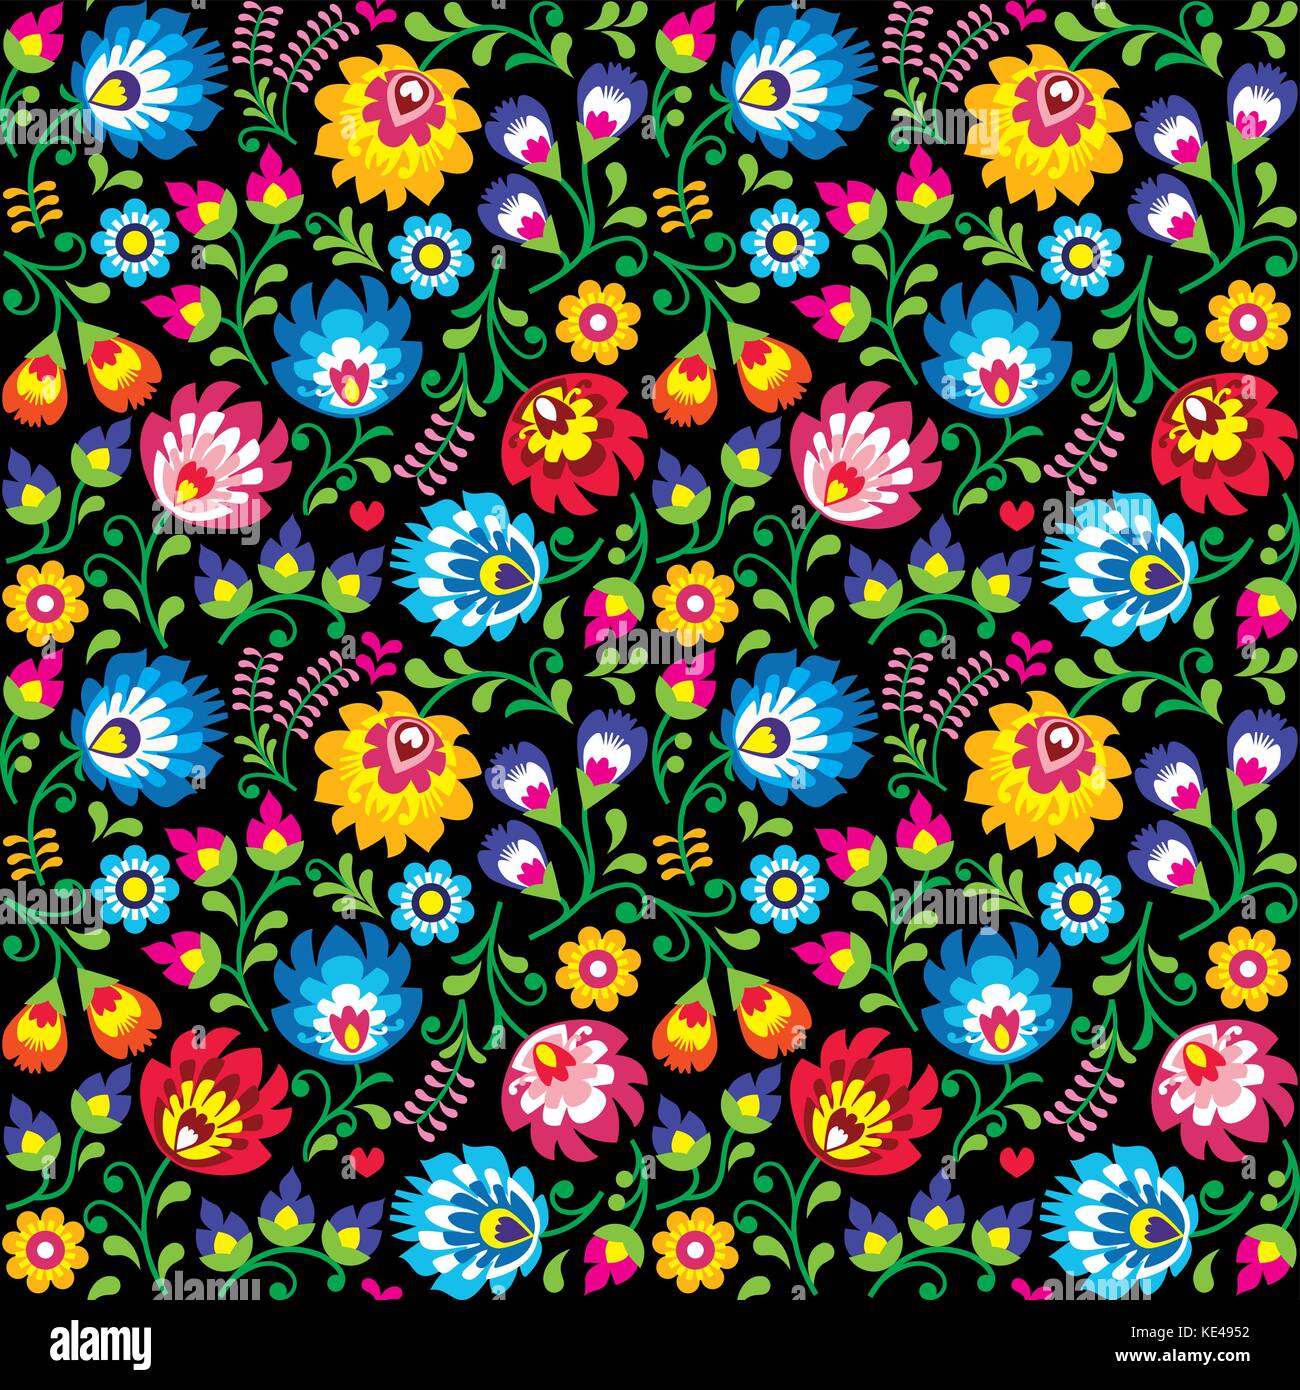 Seamless vector Polish folk art floral pattern - Wzory Lowickie, Wycinanki on black background Stock Vector